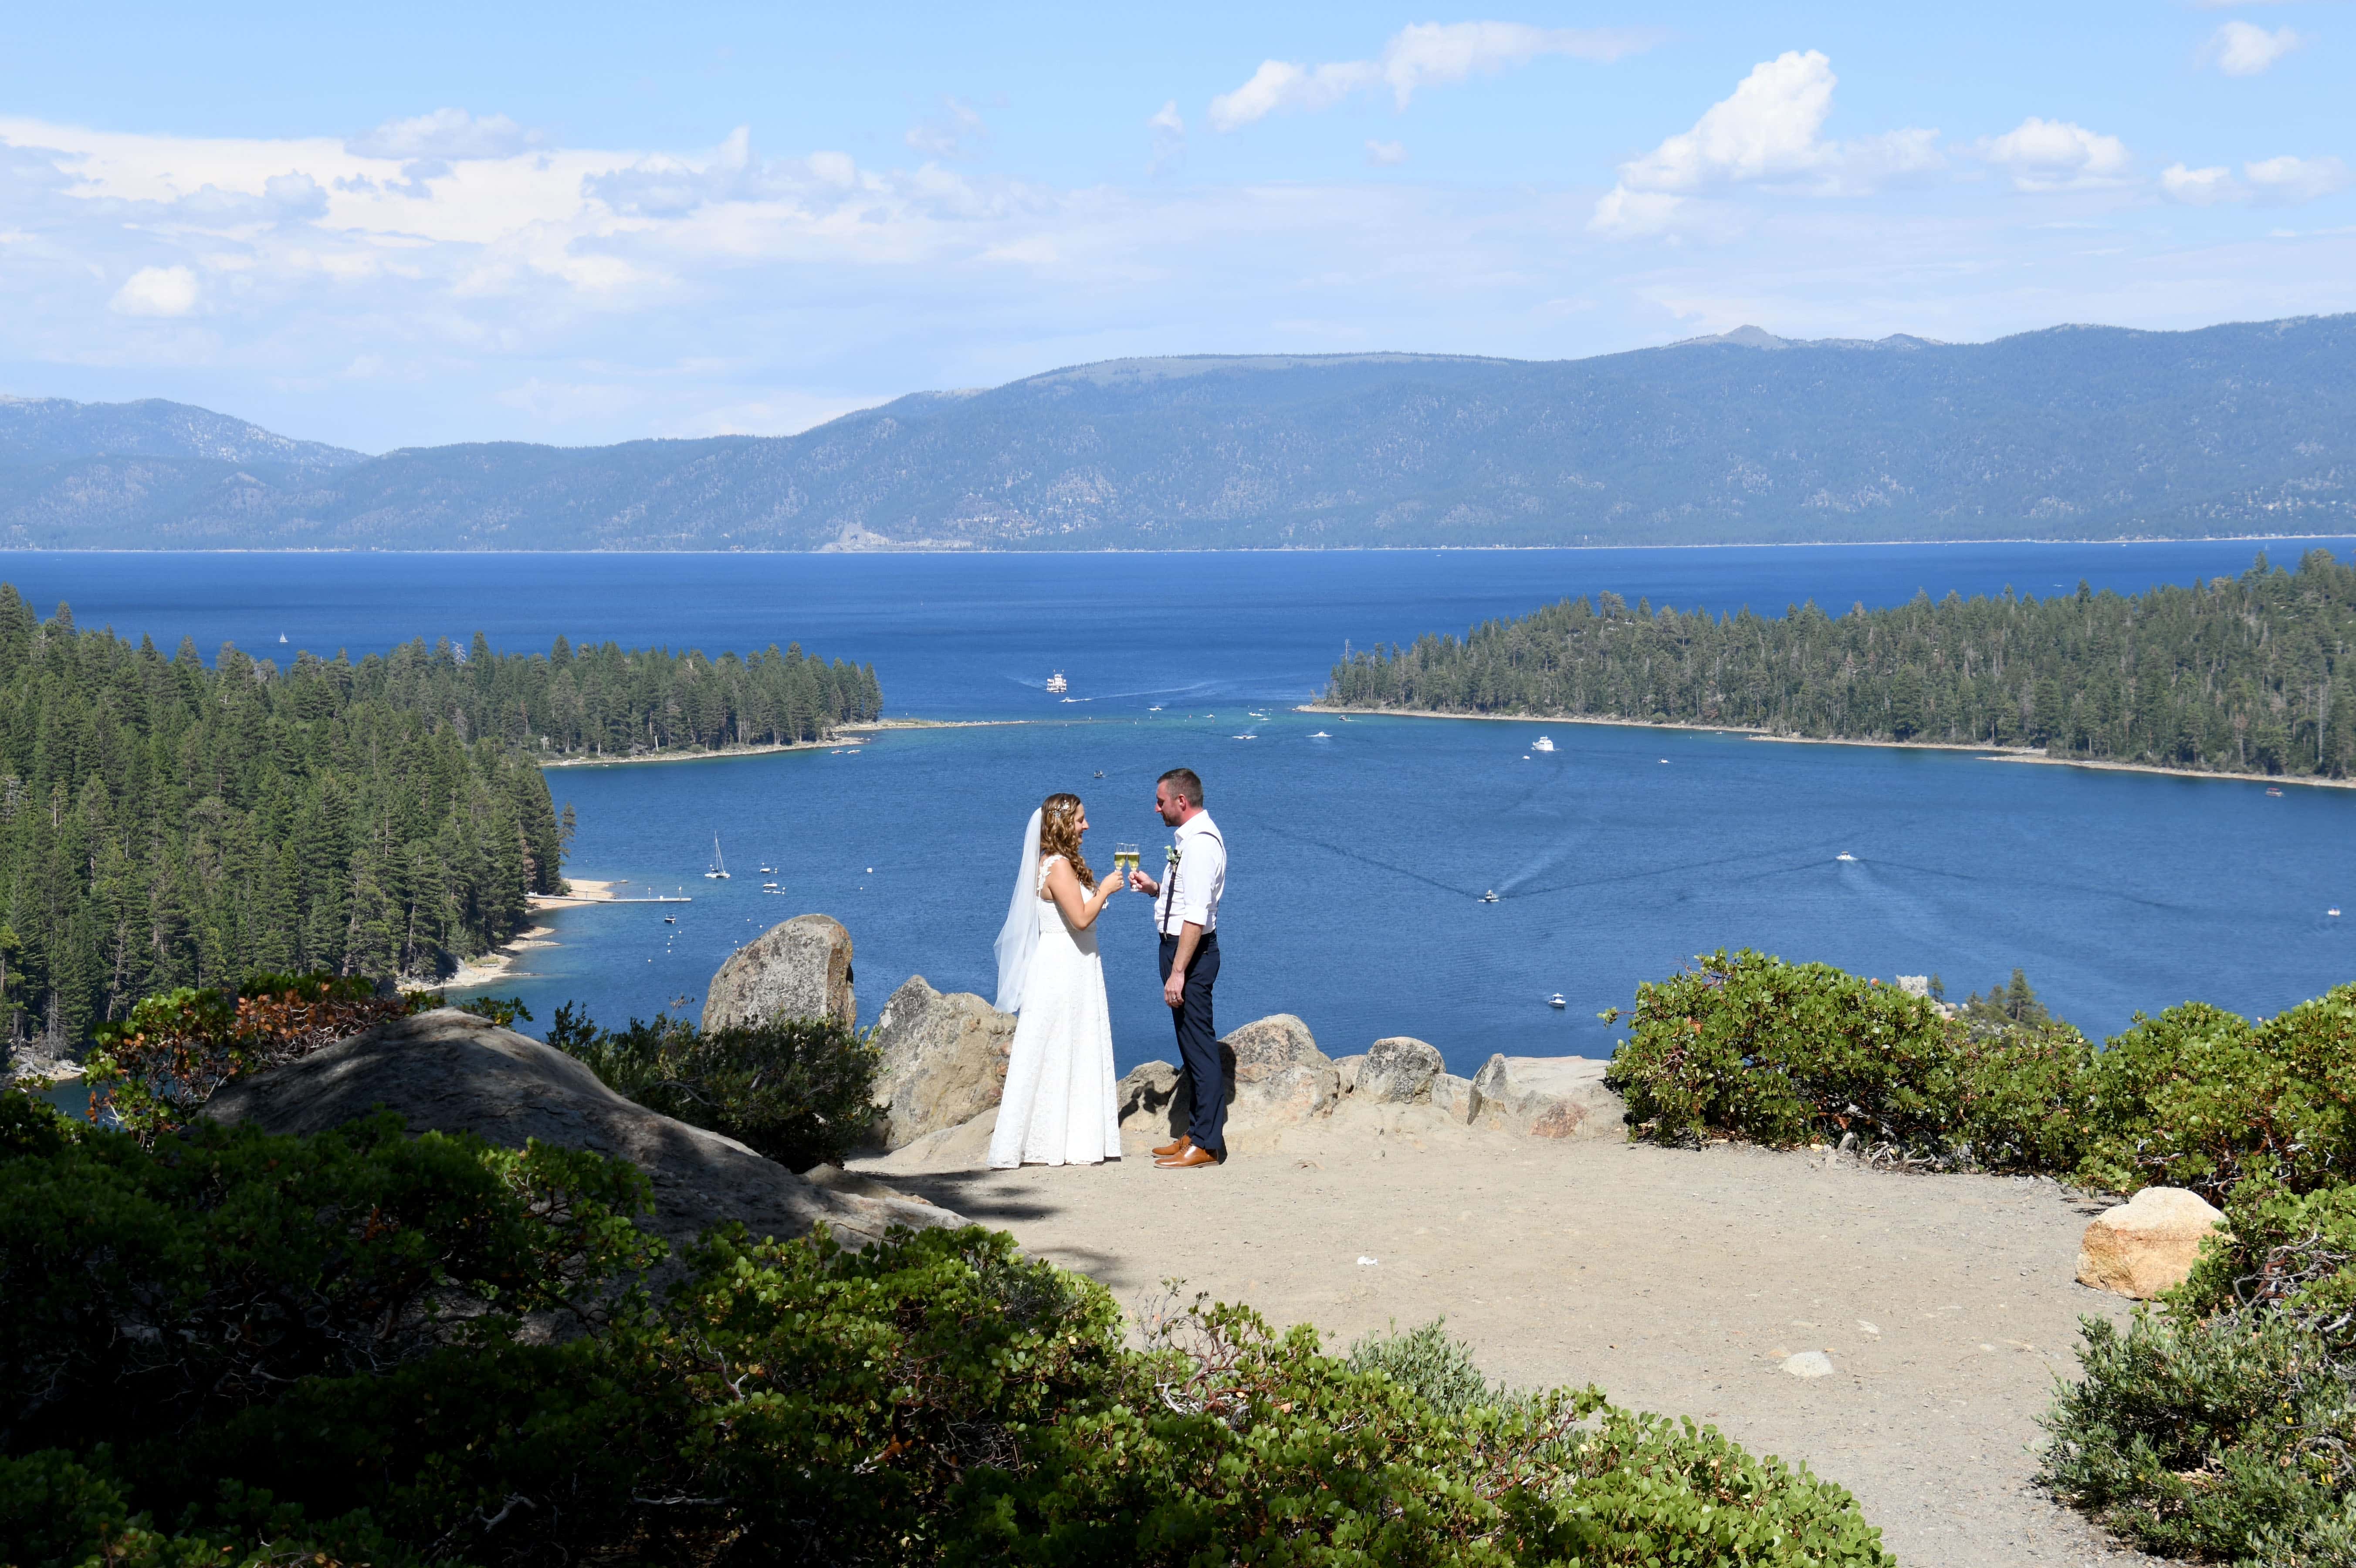 High Mountain Weddings - South Lake Tahoe, CA, US, budget weddings